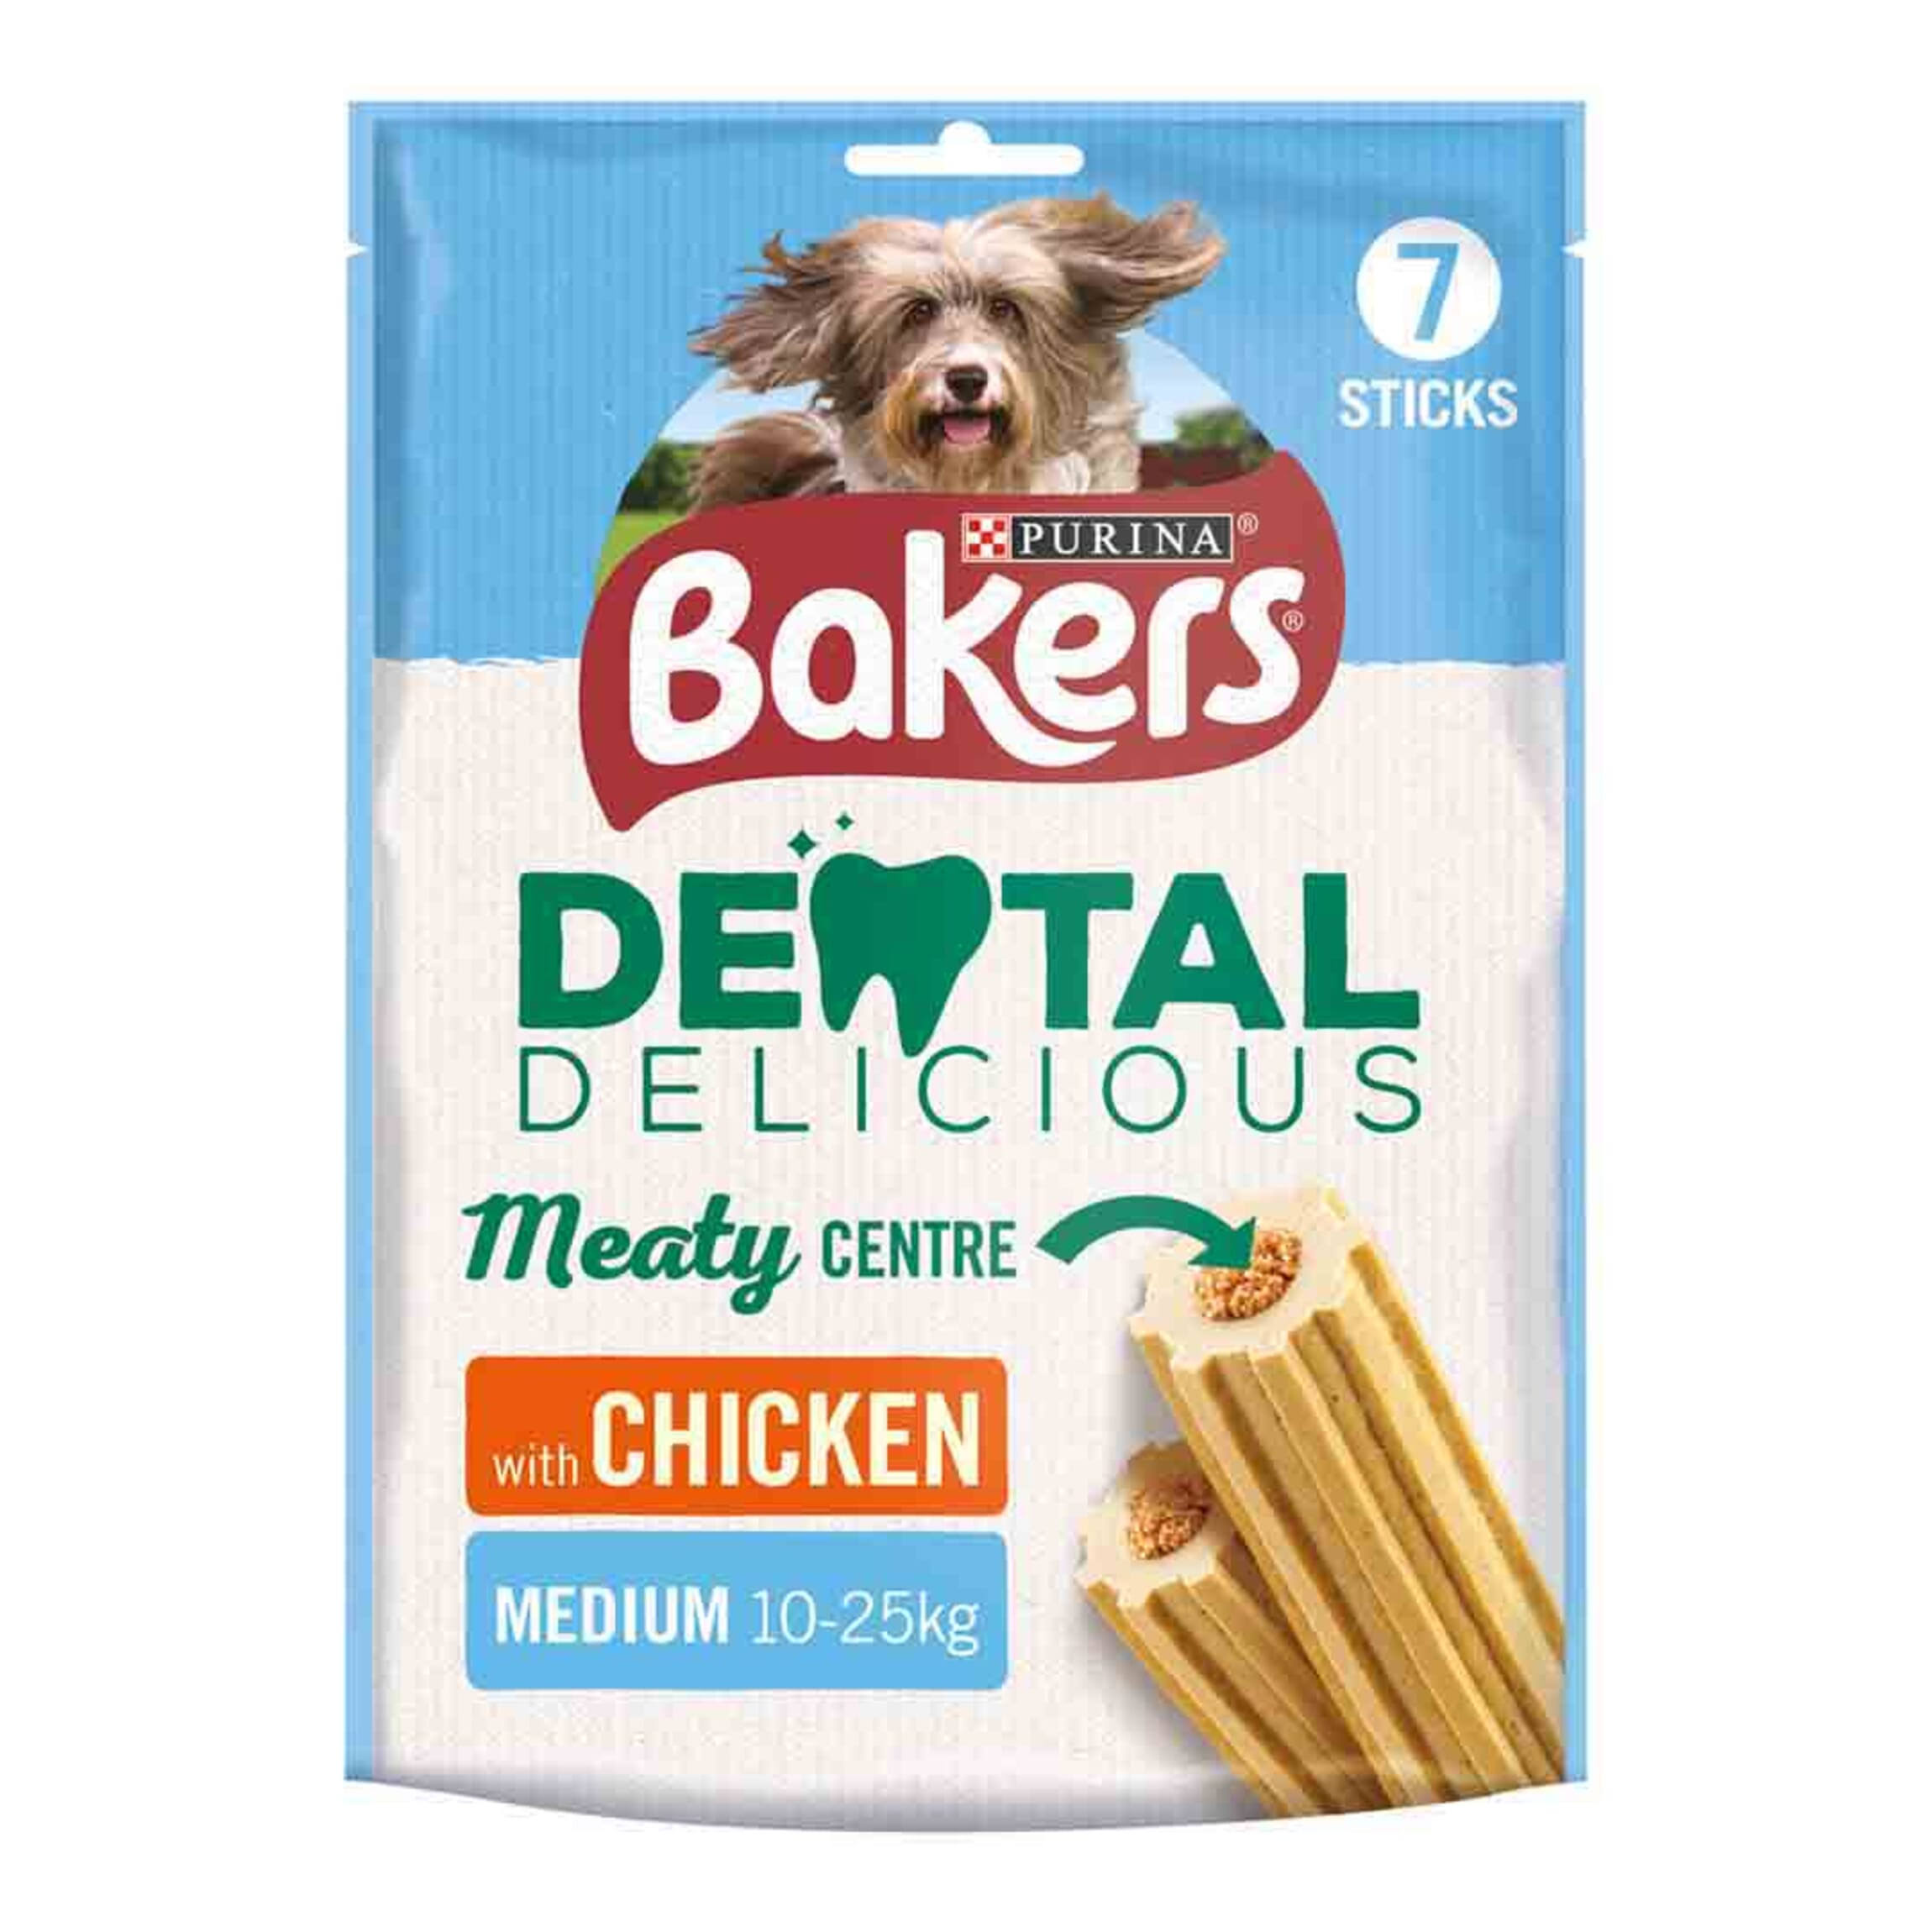 Bakers Dental Delicious Medium Dog Chews - Chicken, 200g